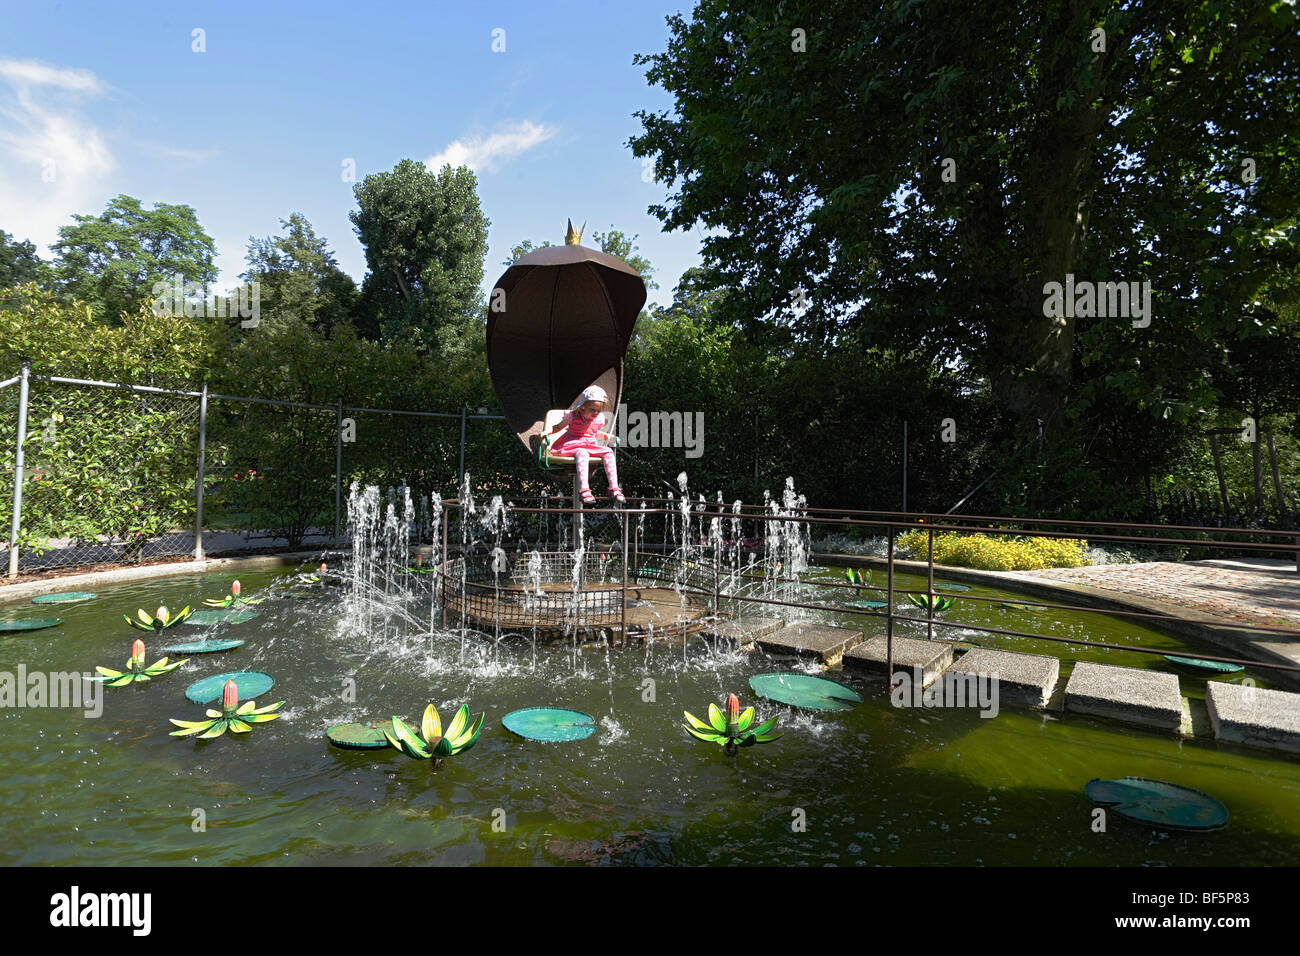 Ragazza seduta in una fontana, fiorente barocco, Fairy-Tale giardino, Ludwigsburg Palace, Ludwigsburg, Baden-Württemberg, Germania Foto Stock